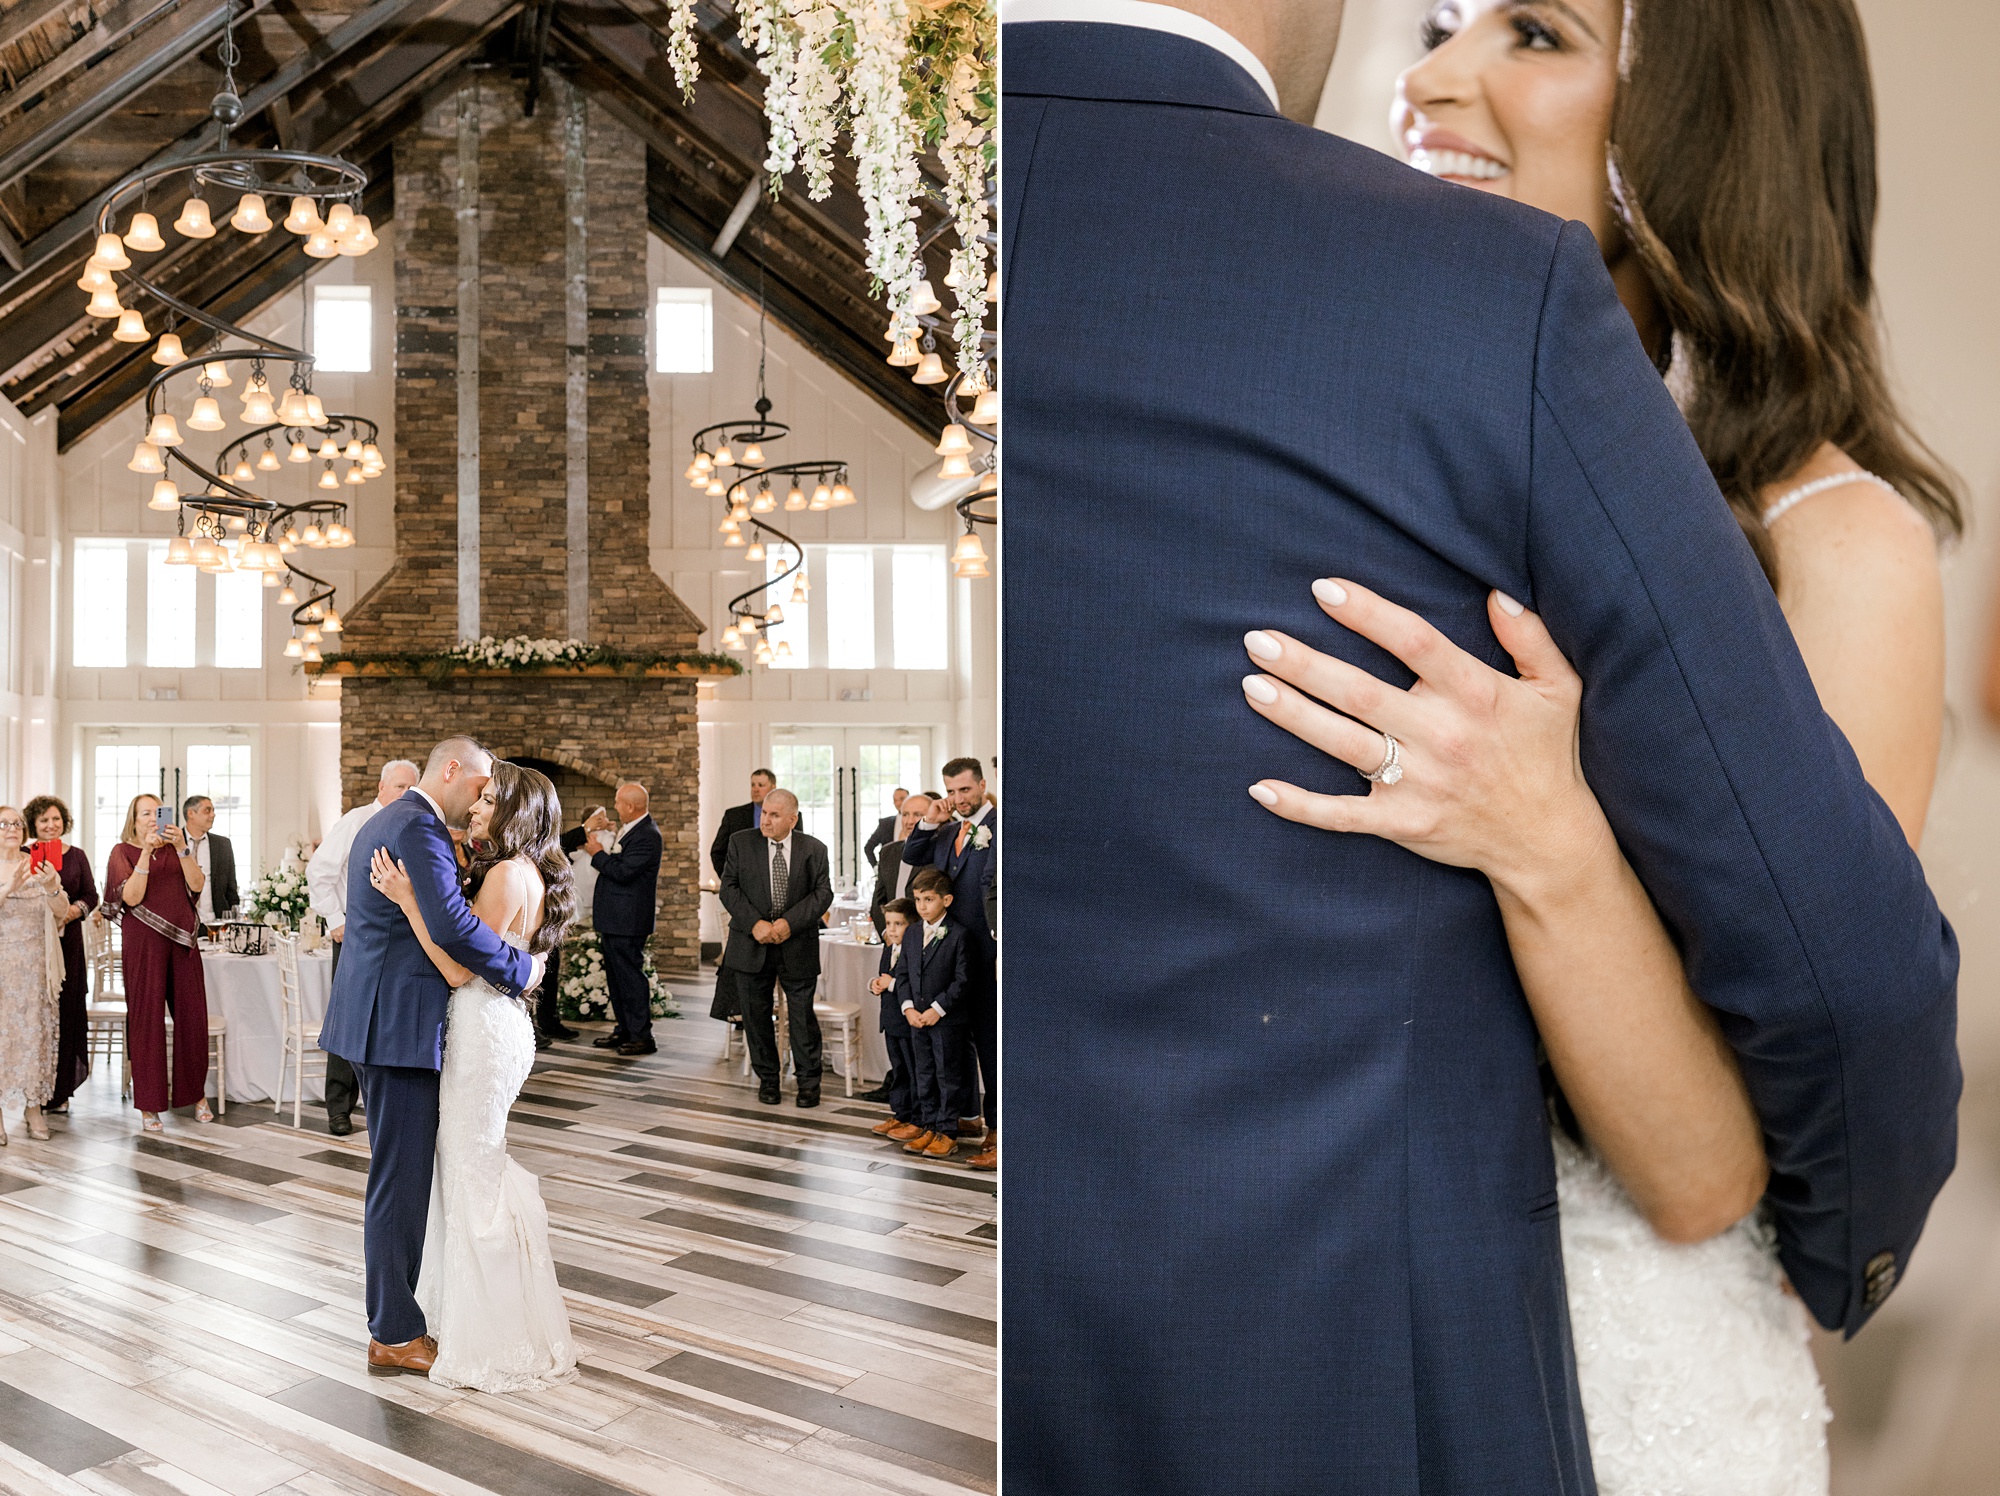 newlyweds dance under chandelier at Whitehouse Station NJ wedding reception